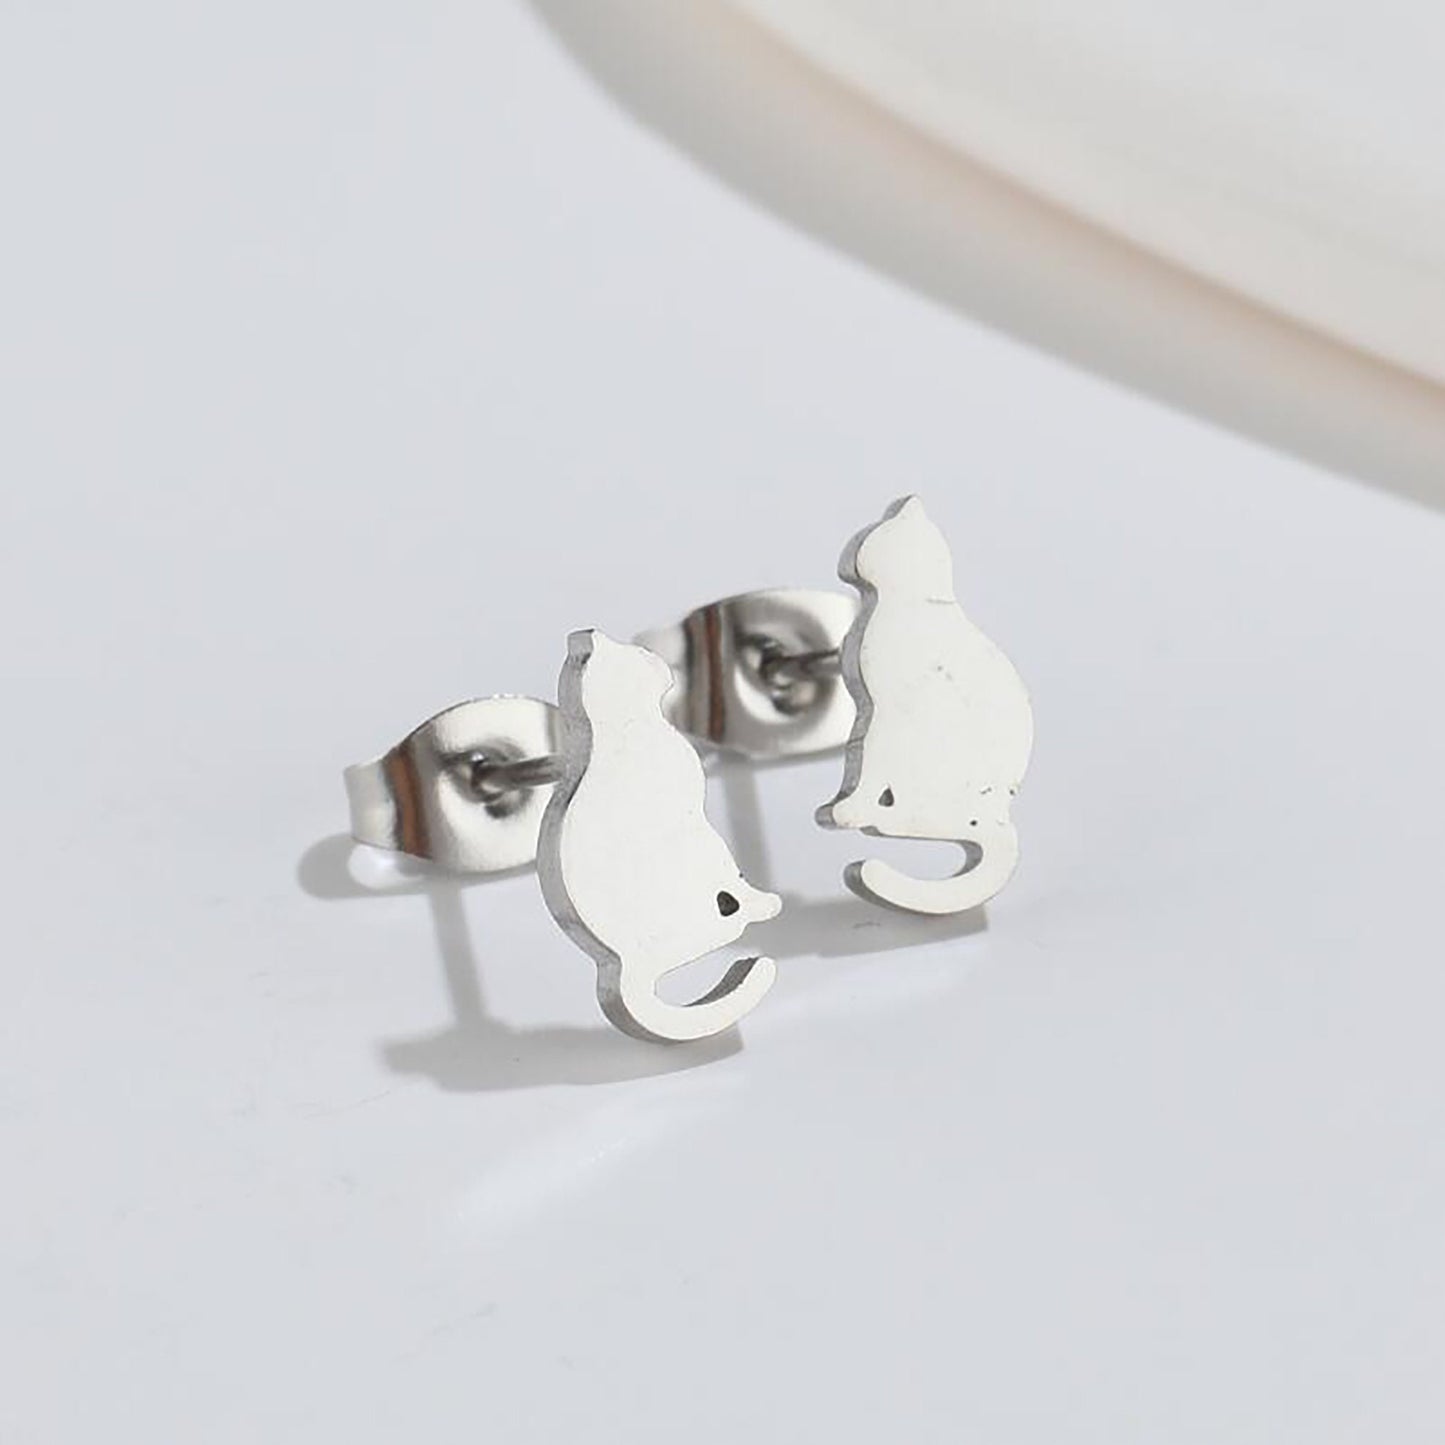 Titanium Cat Earrings, Non Tarnish Earrings, Implant Grade Titanium Waterproof Earrings, Vintage Style Earrings, Minimal Earrings